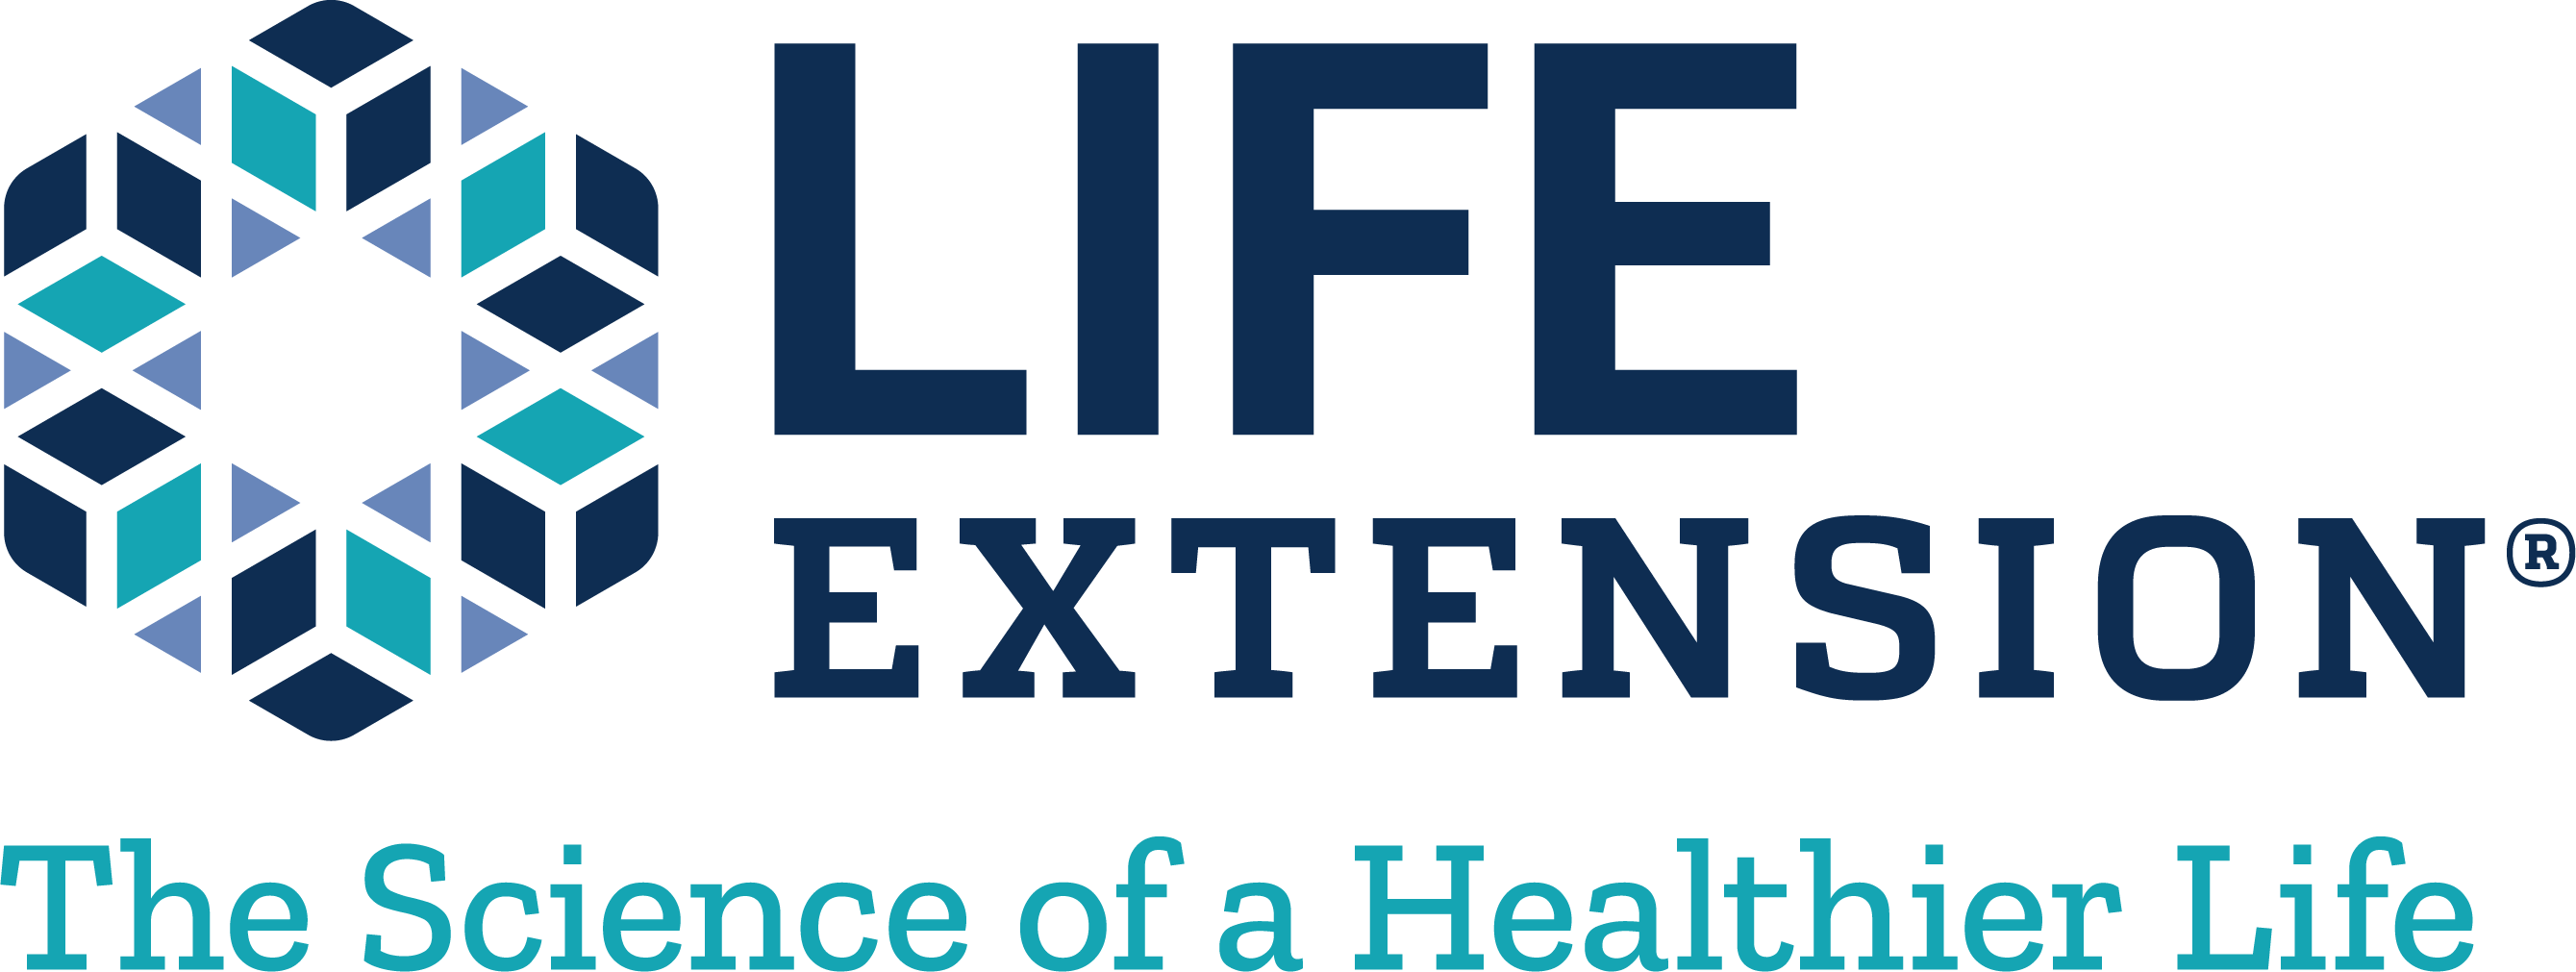 Life extension. Логотип Extension. Бренд Life Extension. Life Extension картинки. Life Extension Foundation штаб.